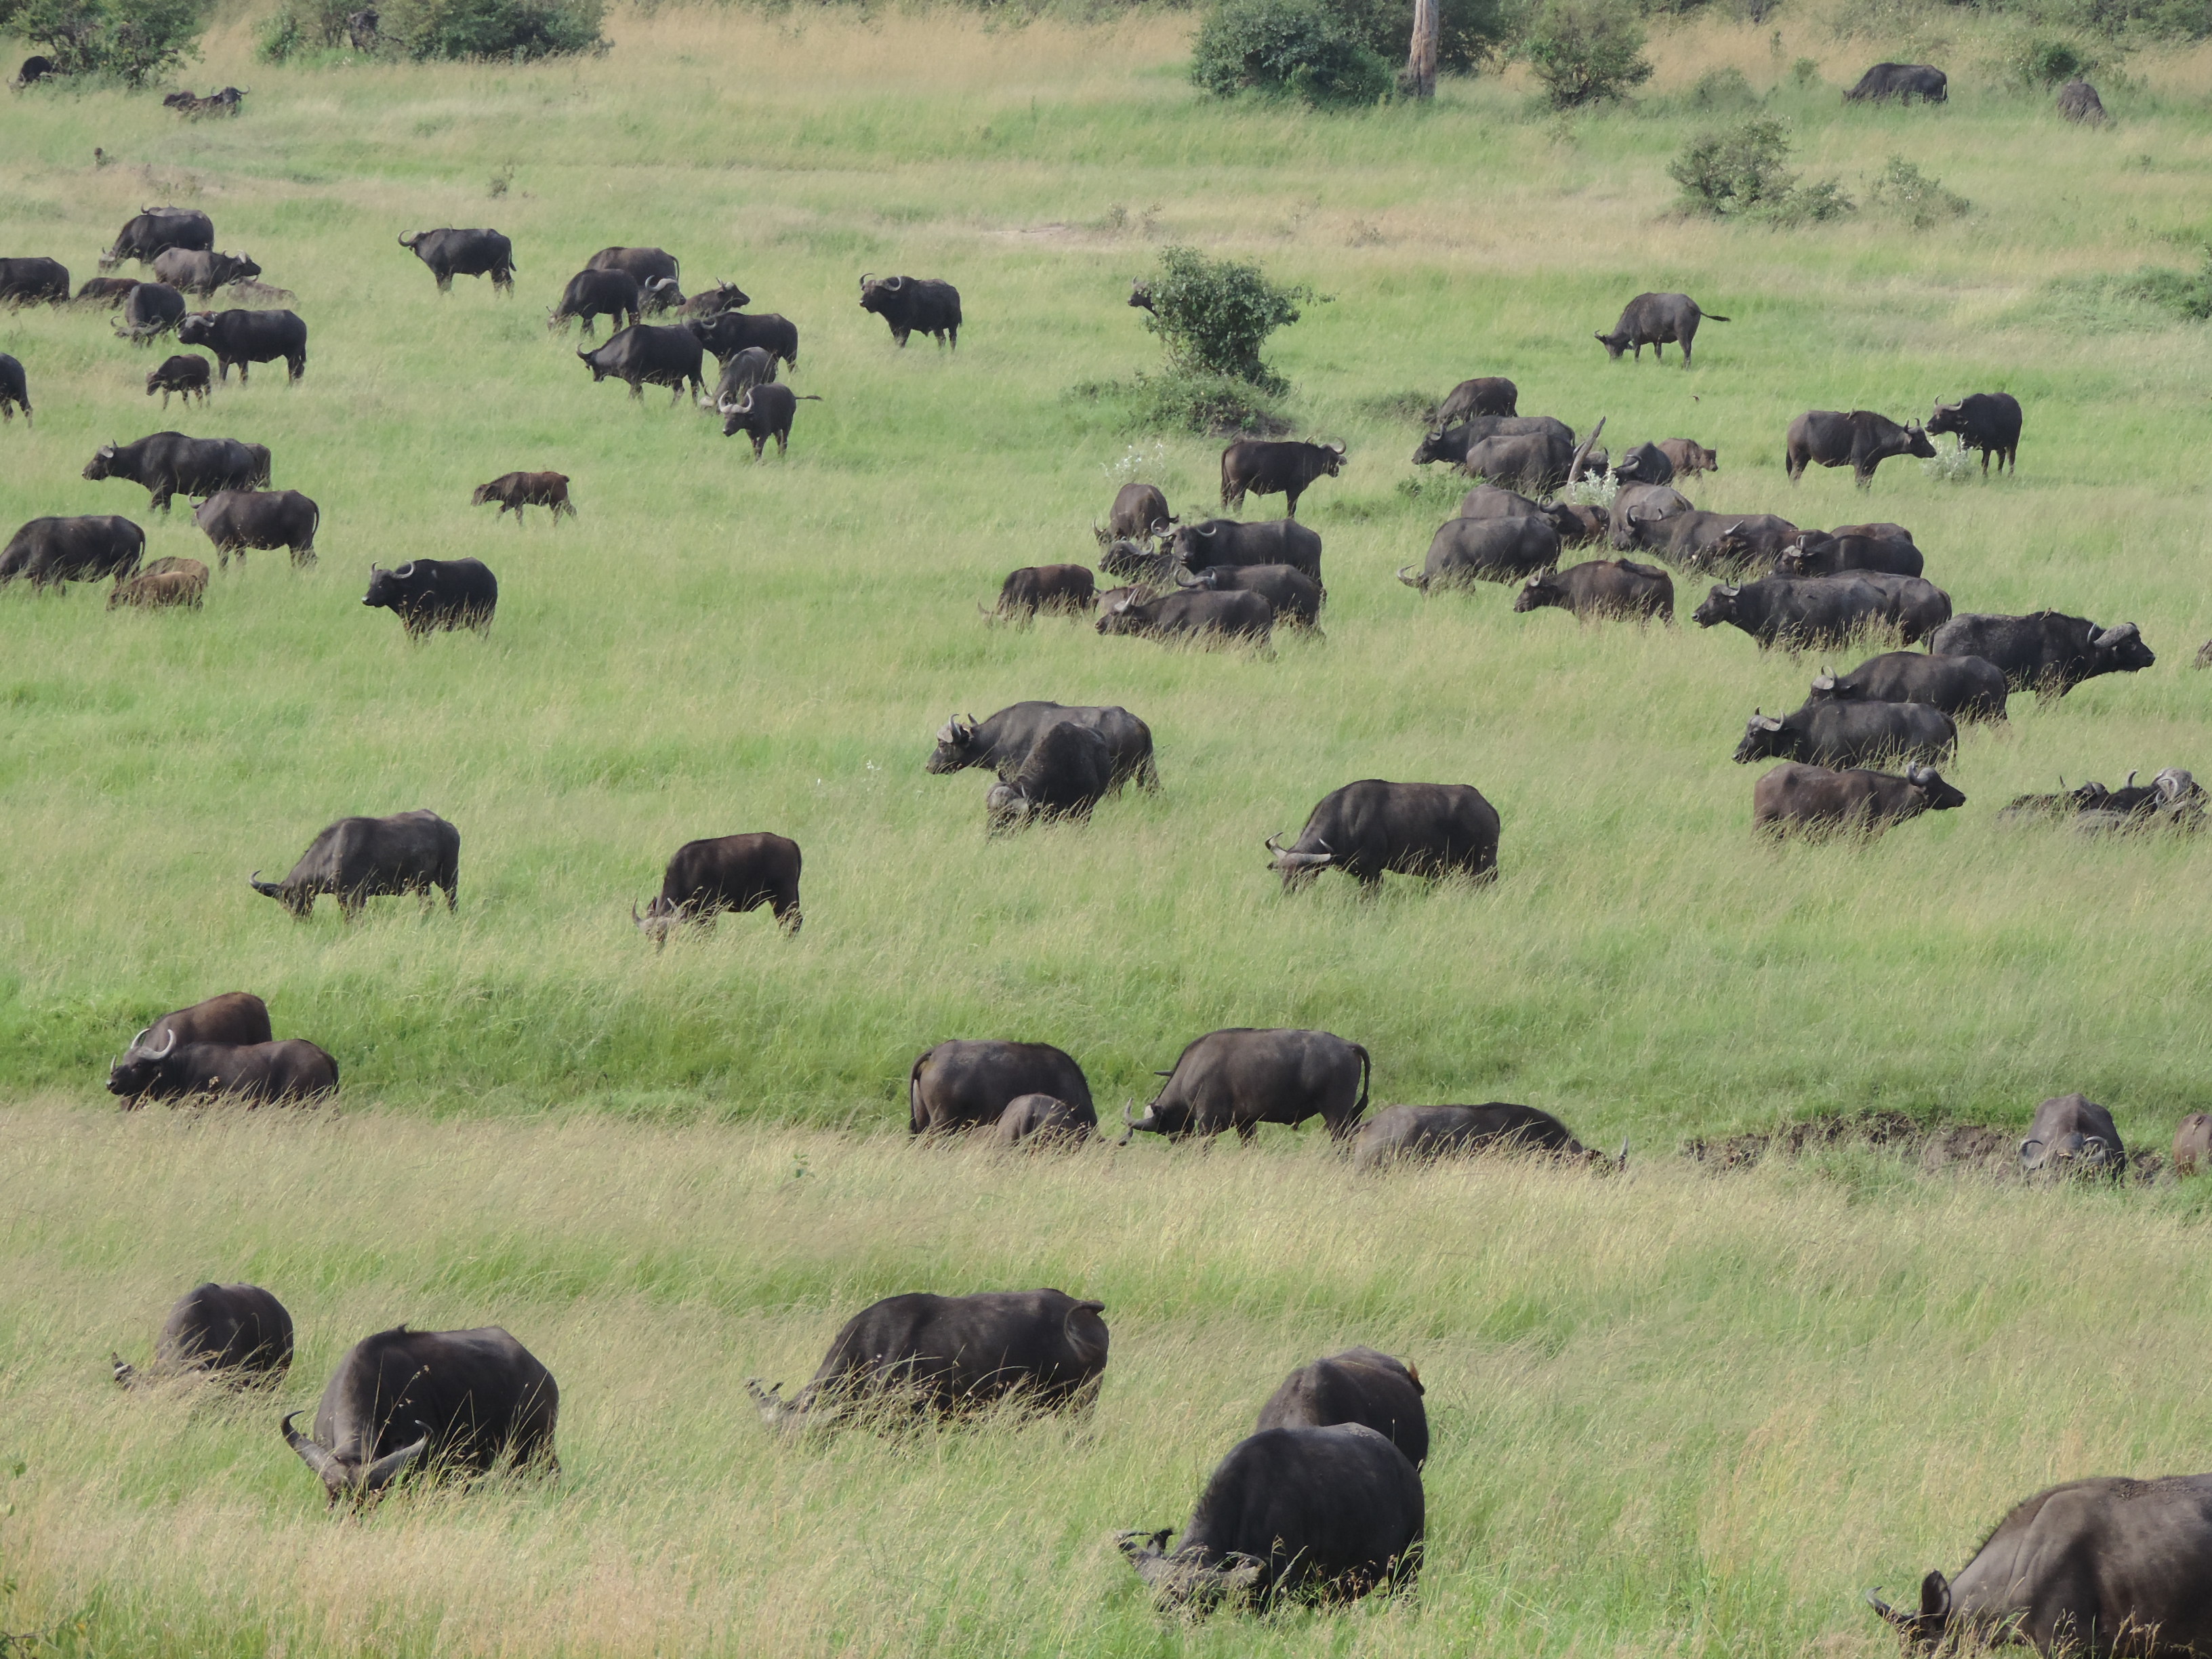  The Big Five, Kenya Adventure Safaris, YHA Kenya Travel,Masai Mara Tours.